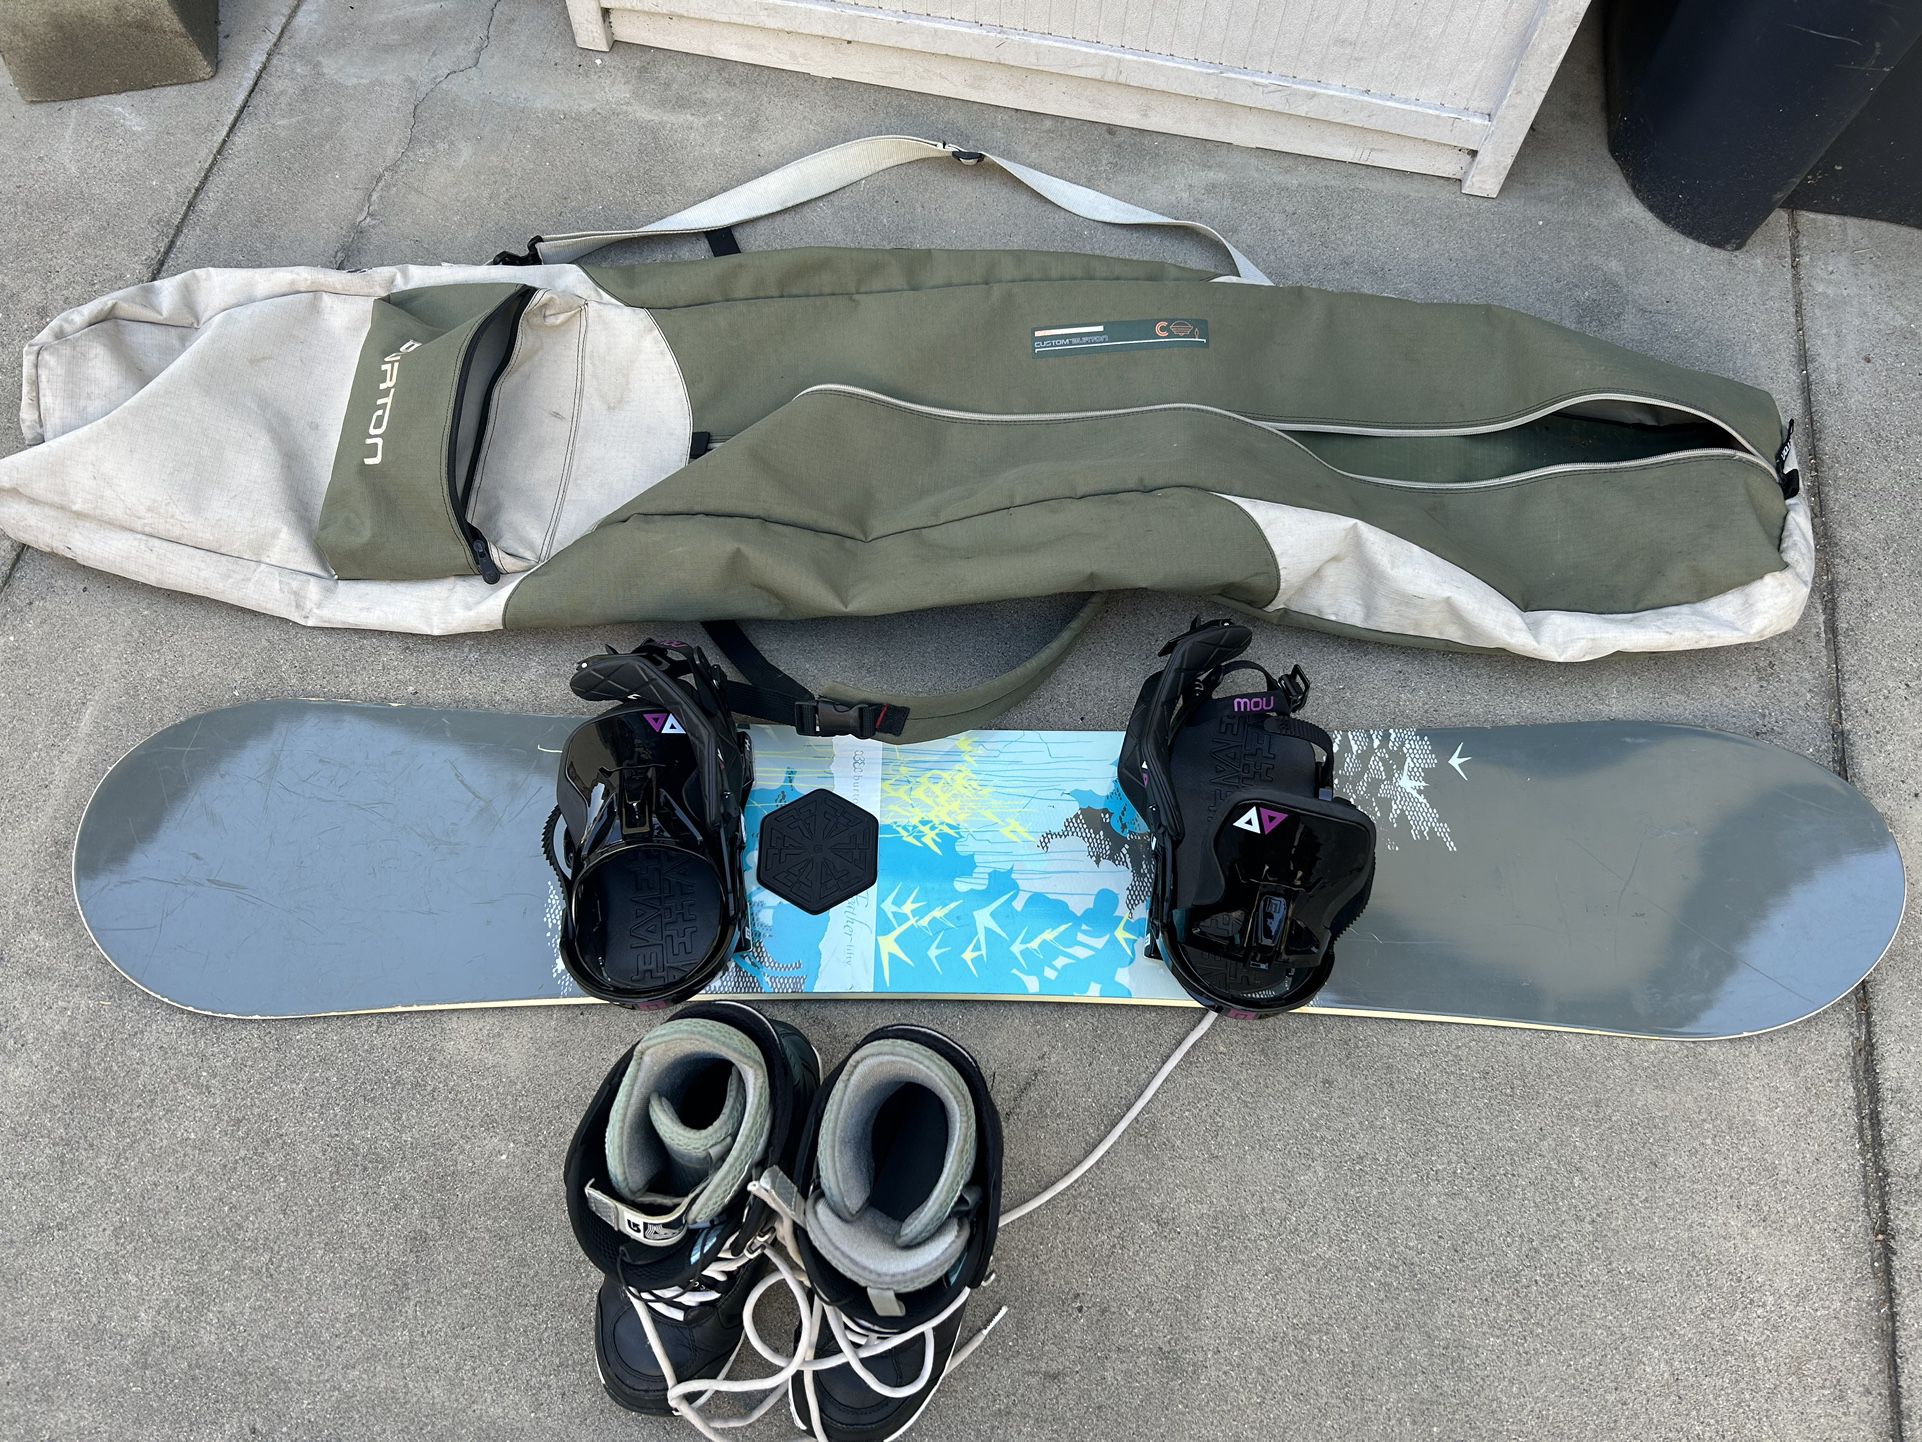 Snowboard, Boots, Binding and Bag